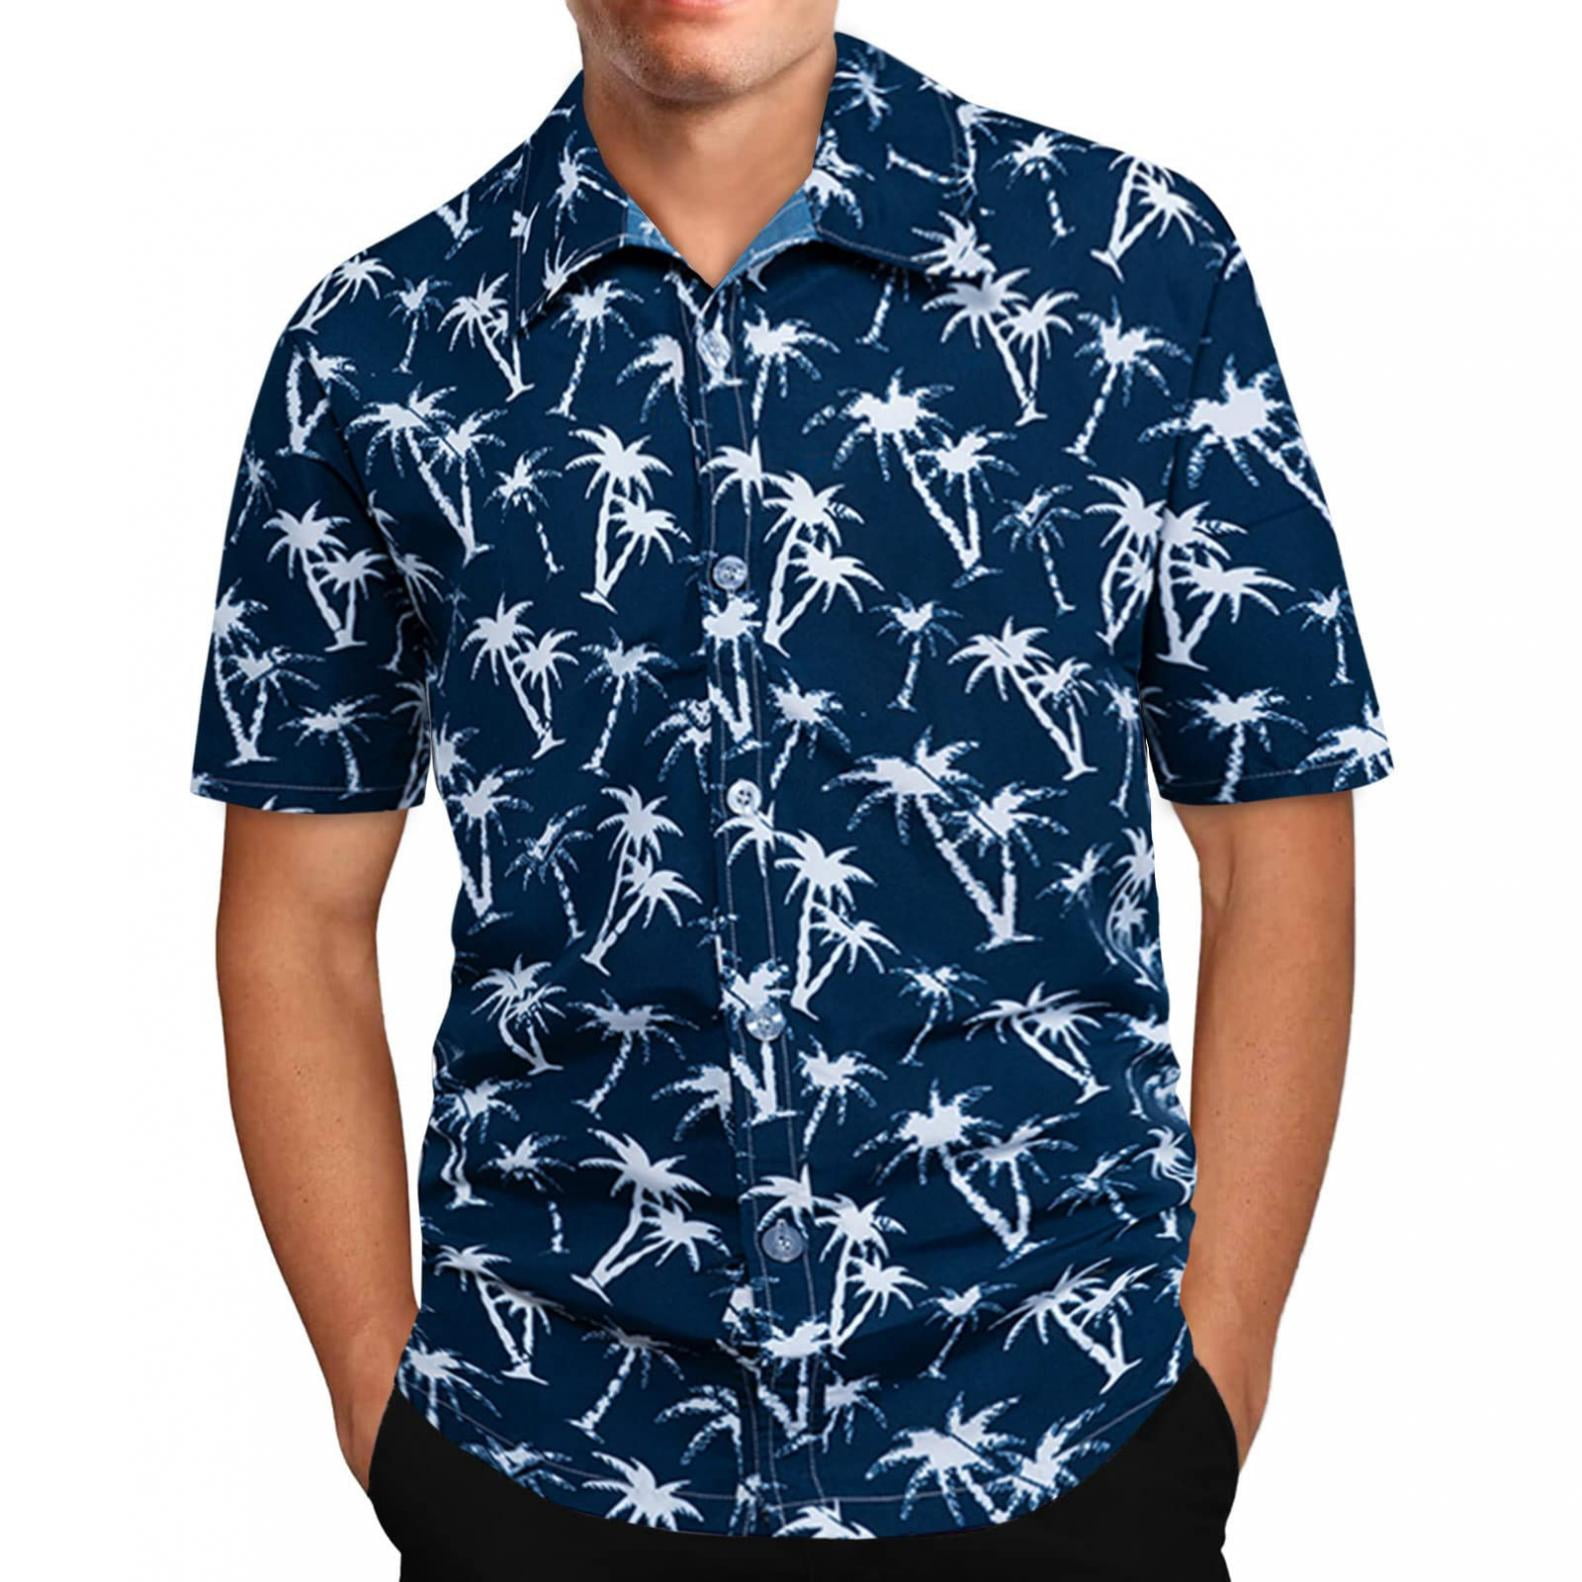 Mchoice Mens Summer Tropical Shirts Short Sleeve Button Down Aloha ...